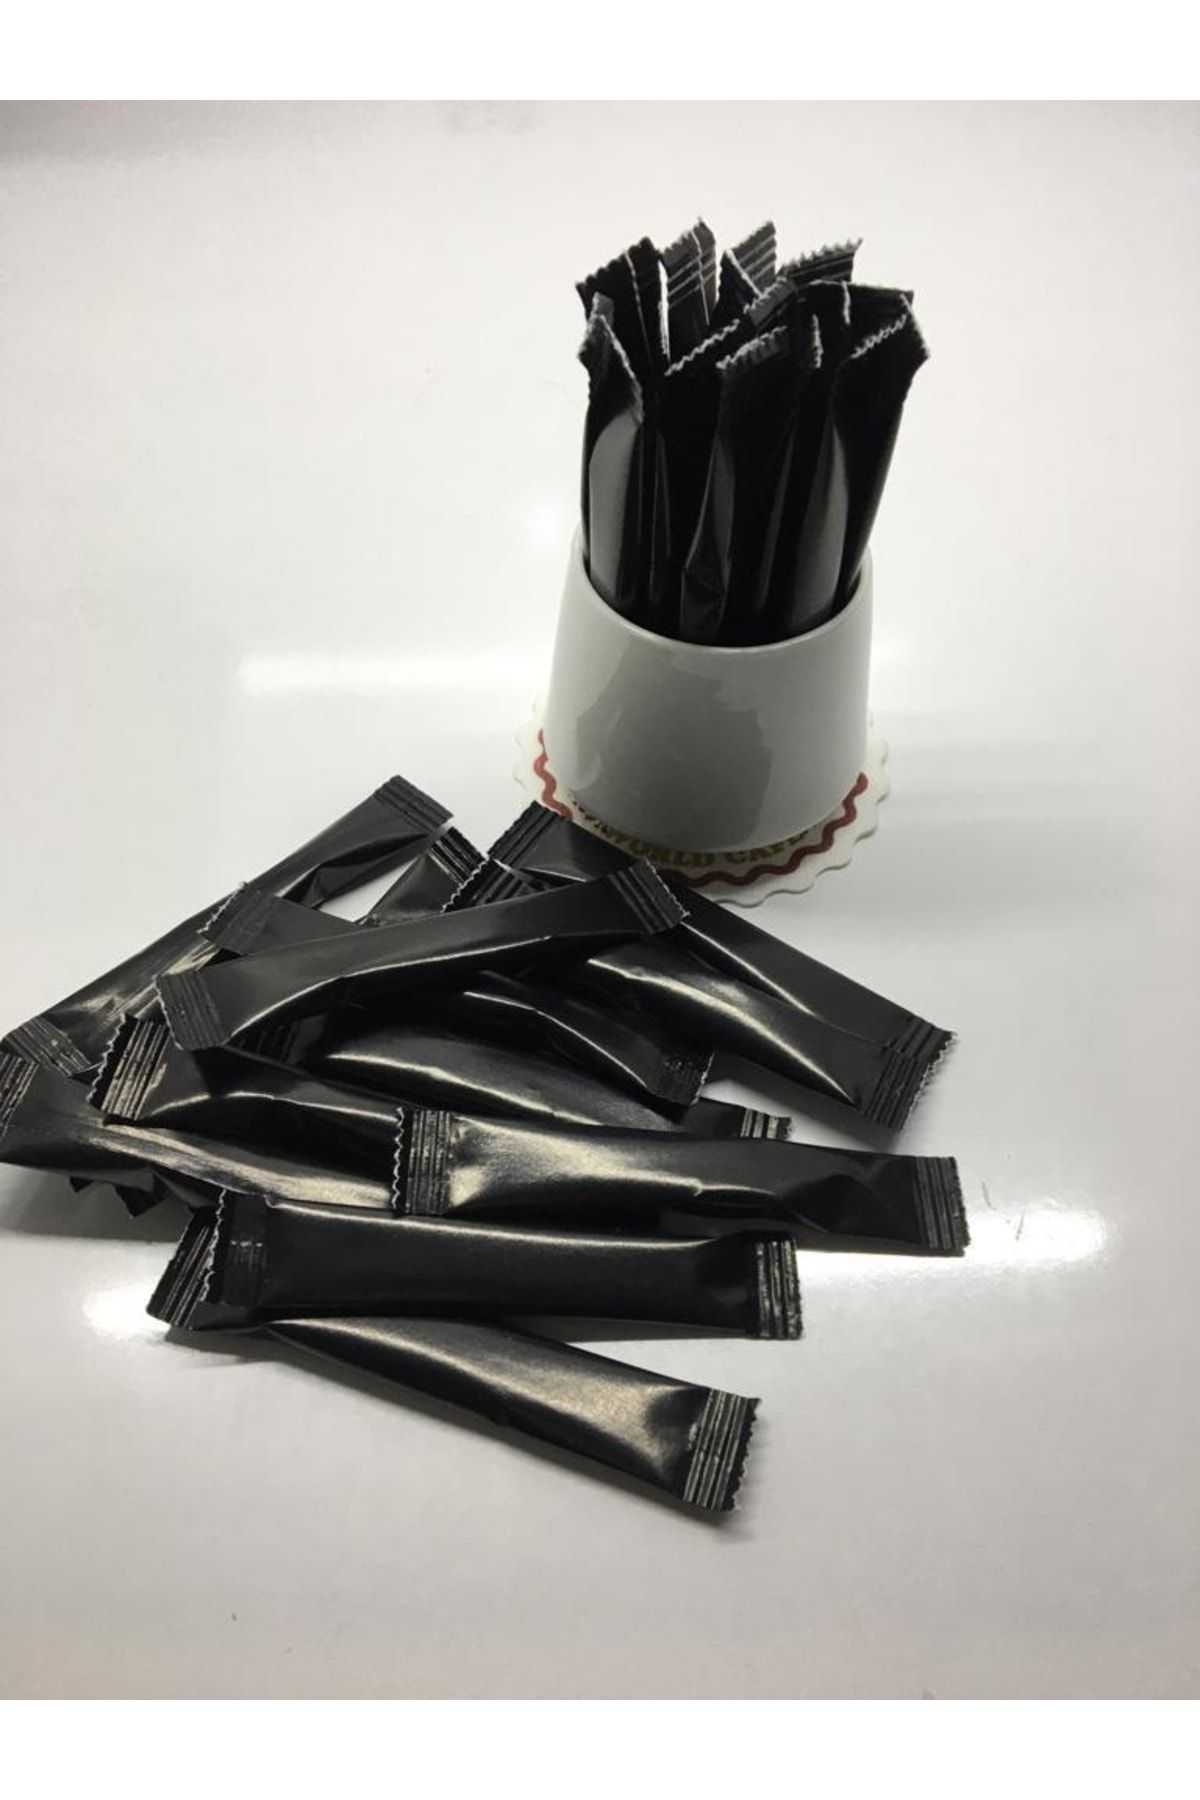 Merpak Ambalaj Stick Şeker Siyah Baskılı Stick Toz Şeker 3 Gr X 200'lü